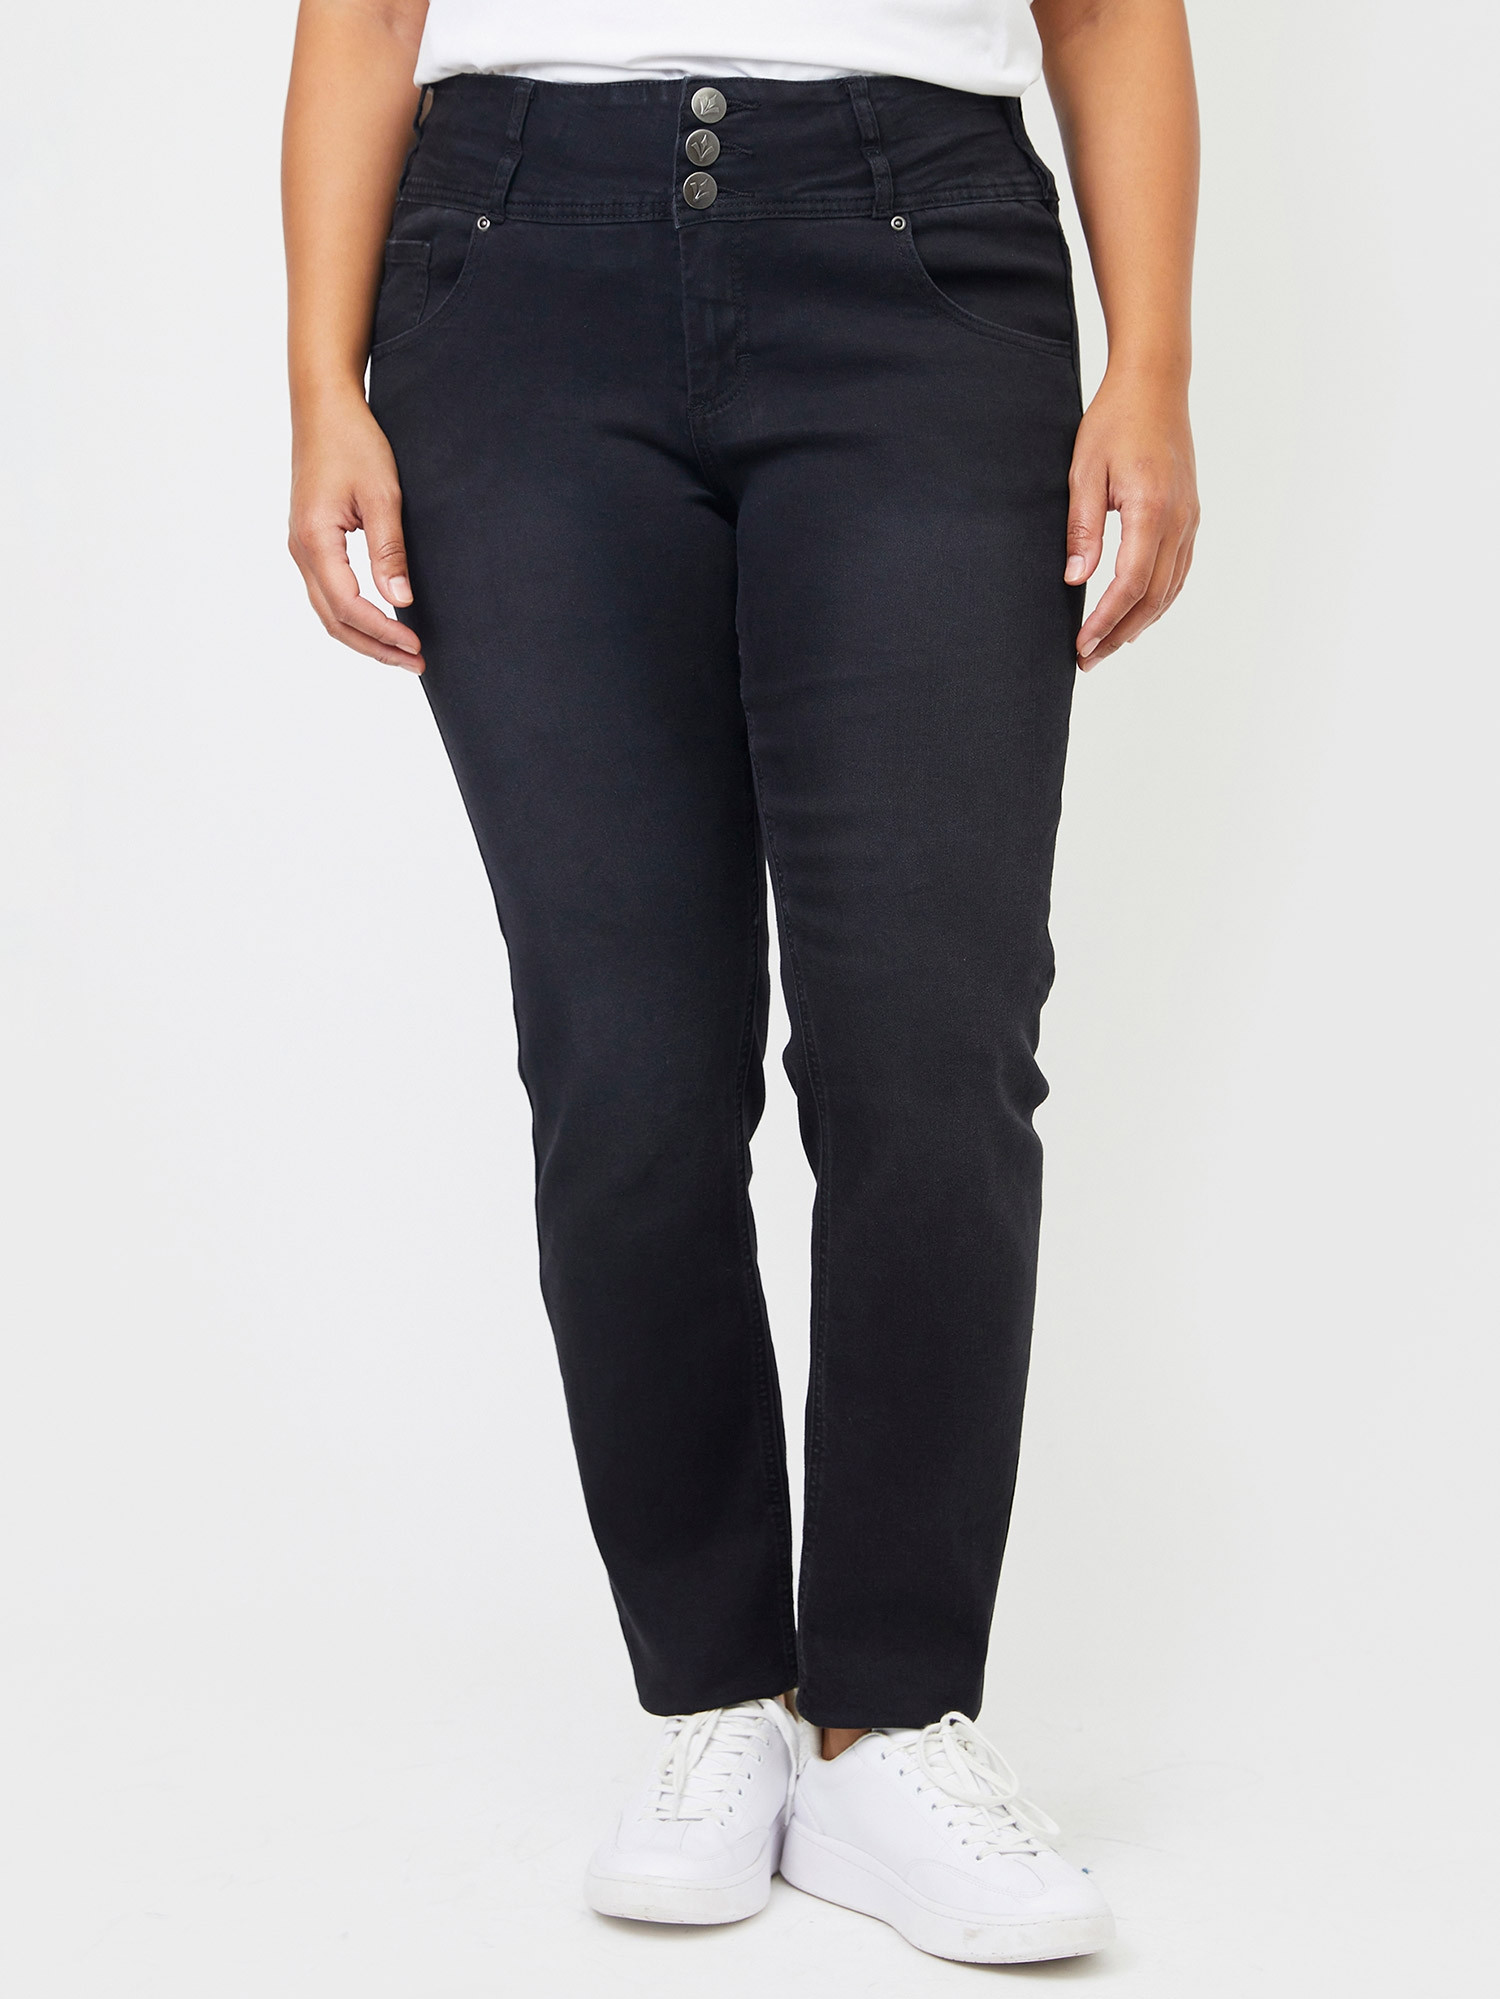 MILAN - Svarta stretchiga jeans